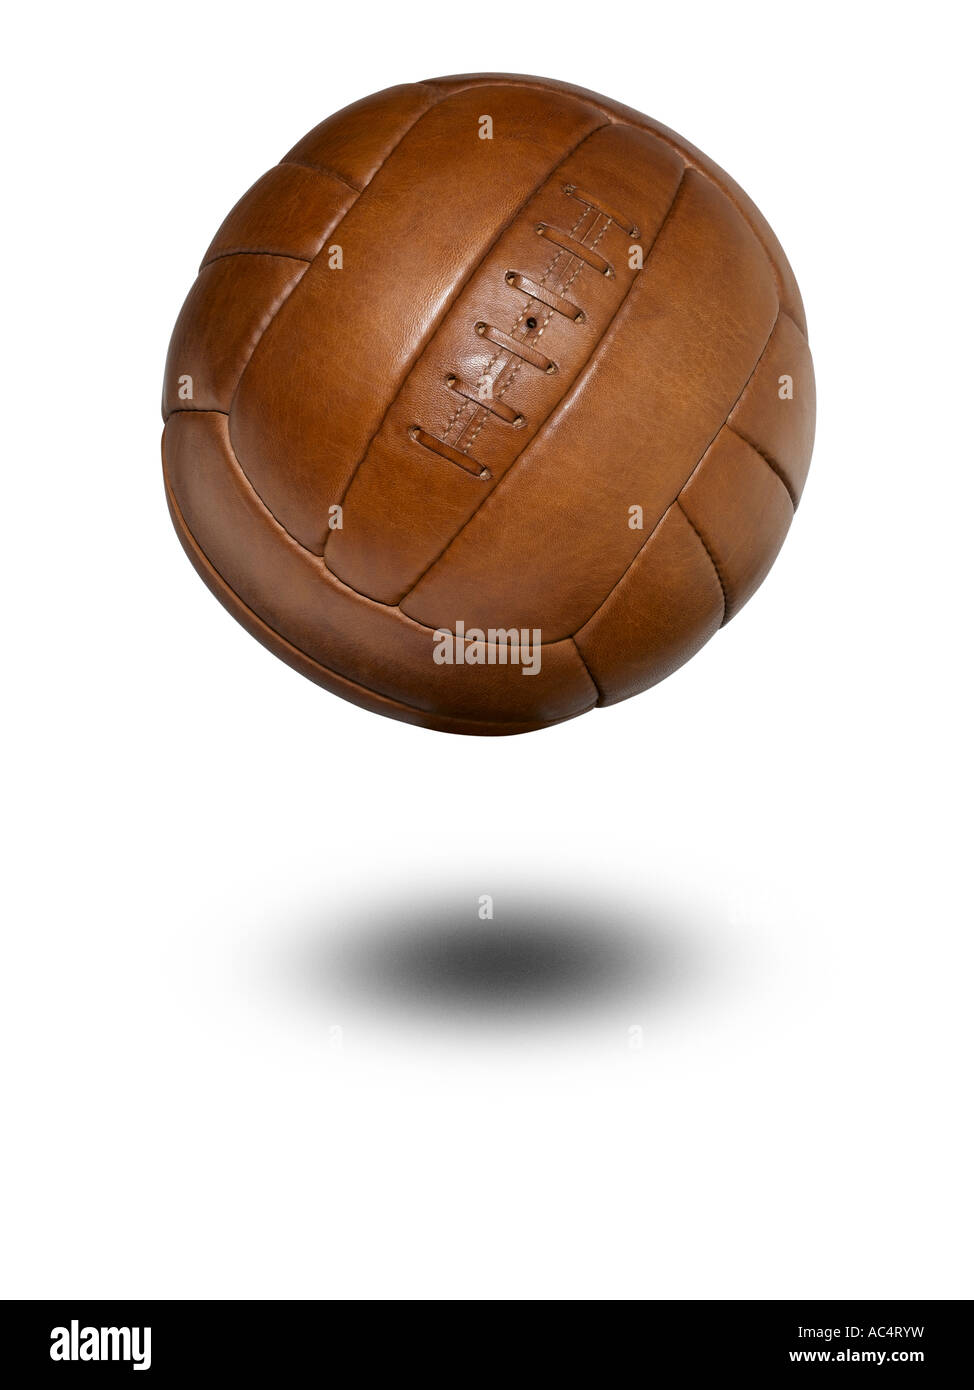 Un football cuir vintage Banque D'Images